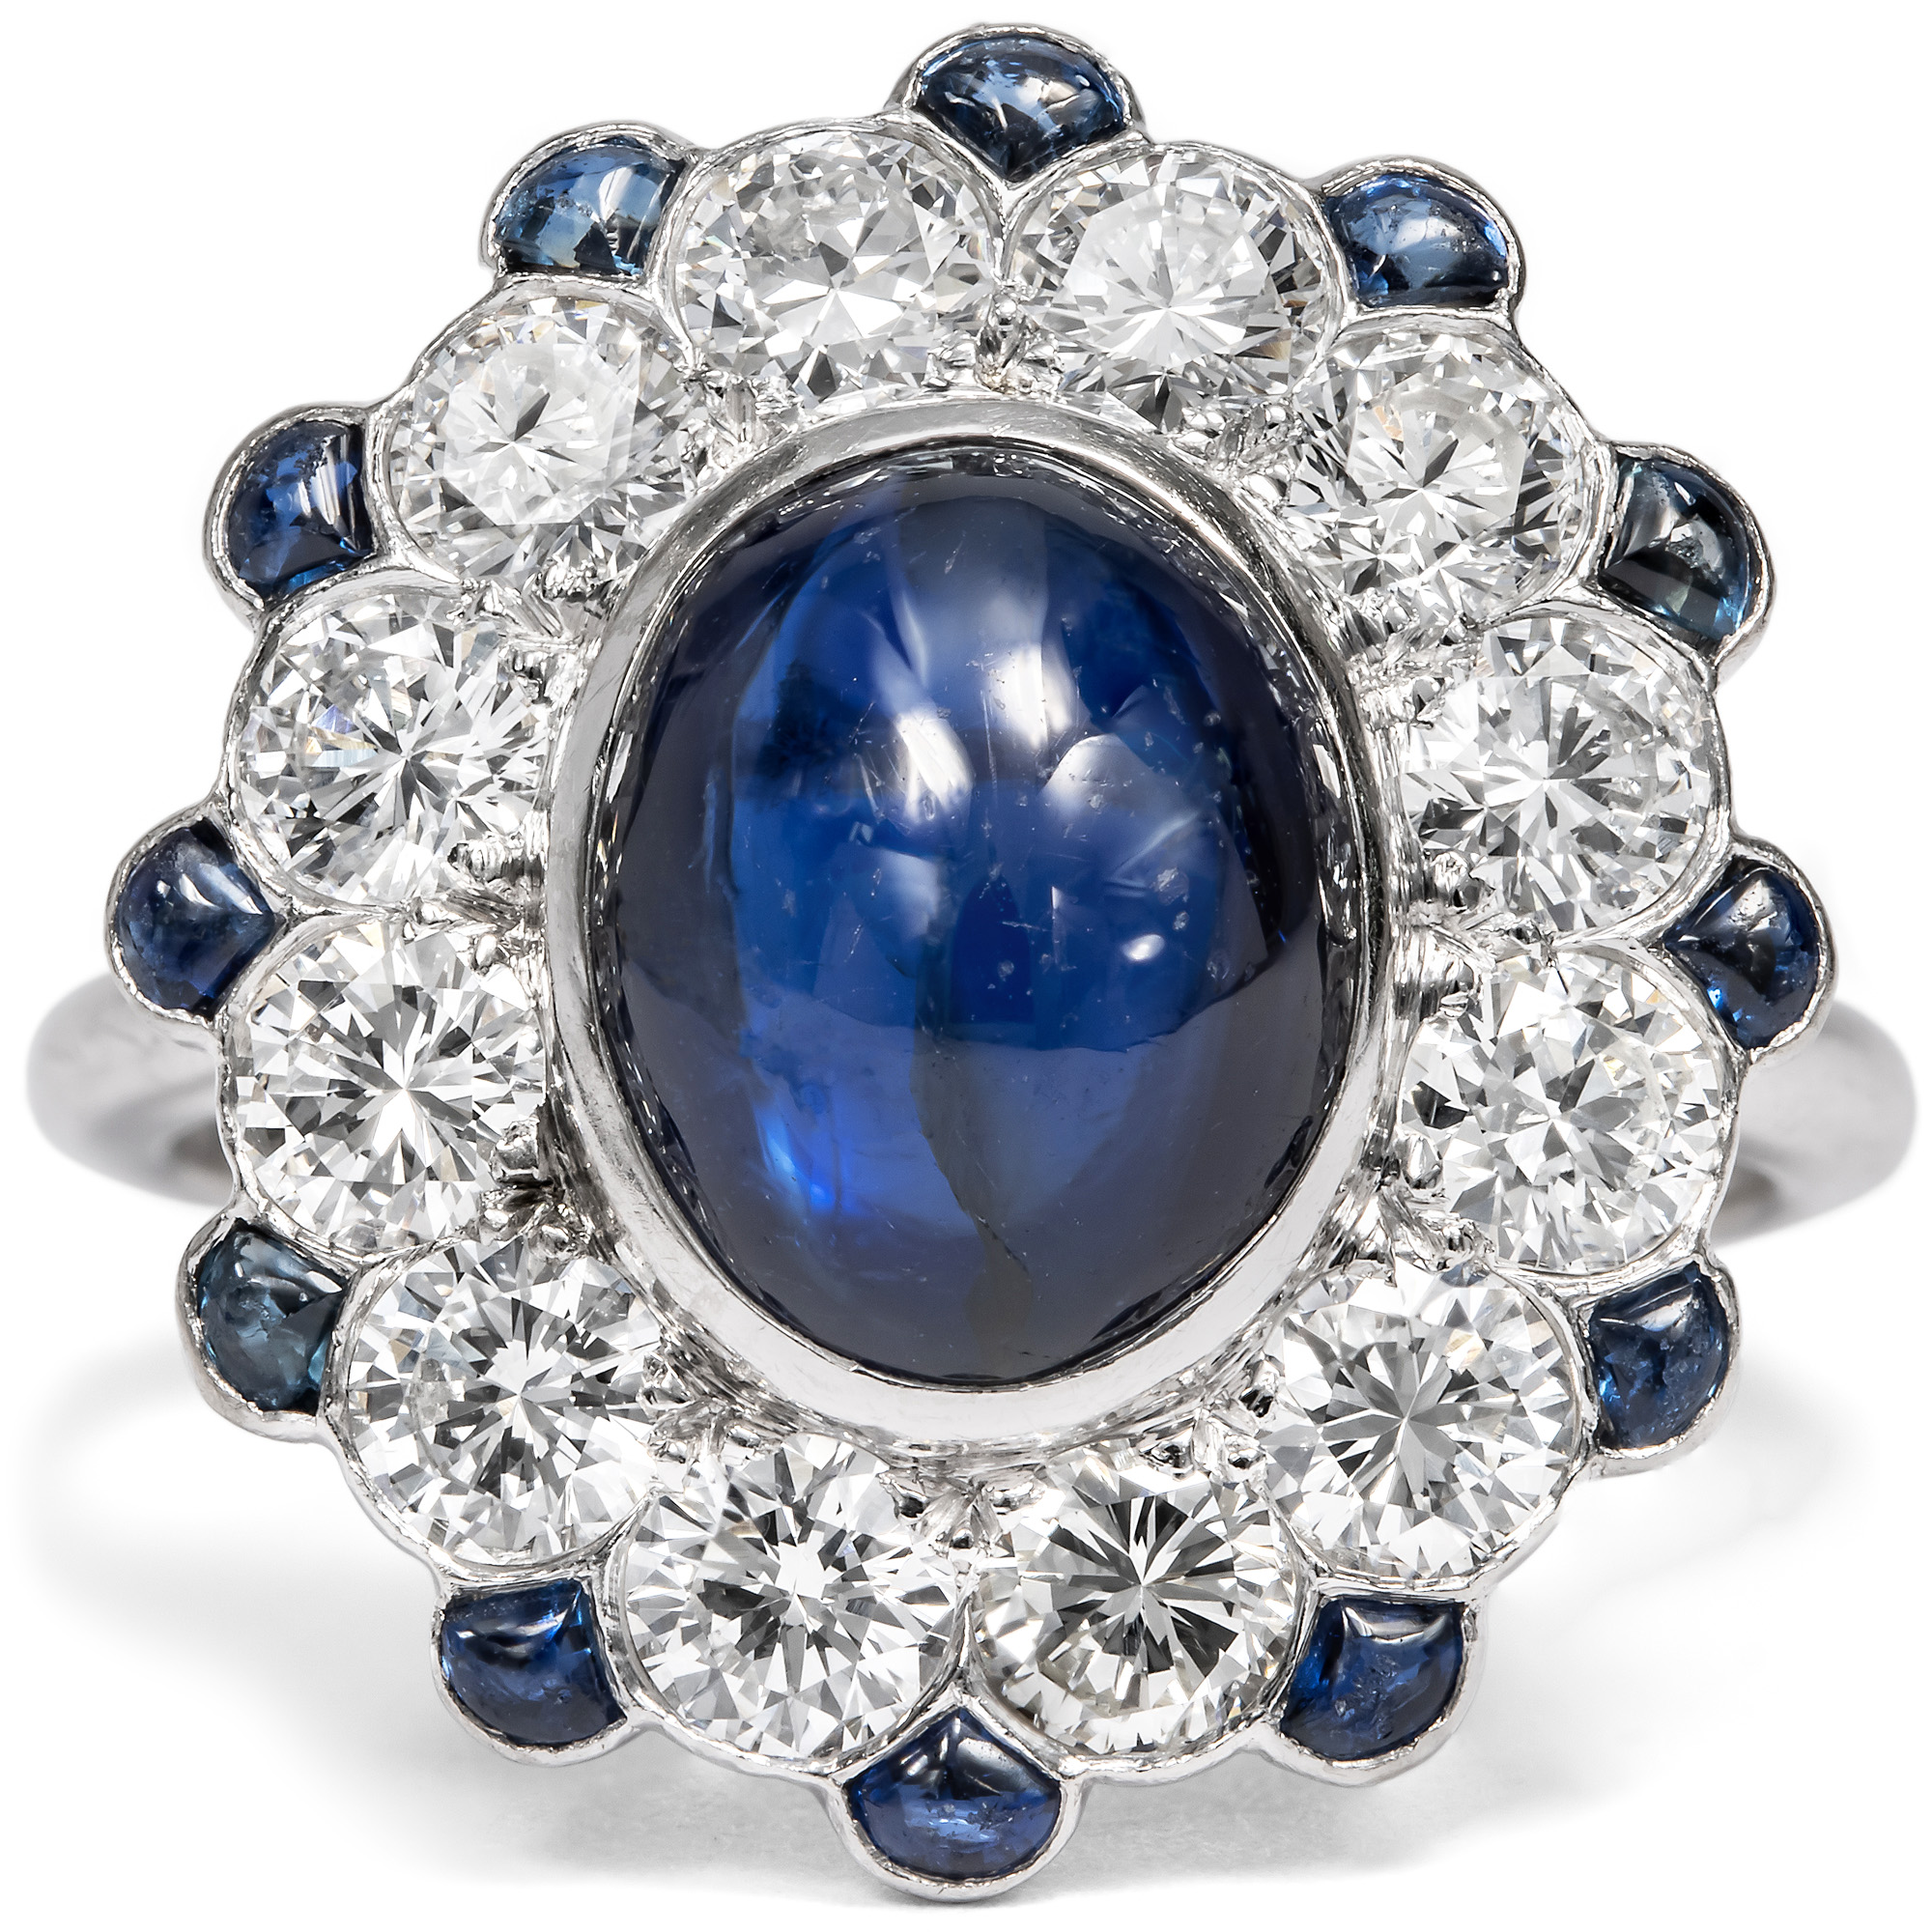 Precious Vintage Platinum Ring with Sapphires & Diamonds, London 1977